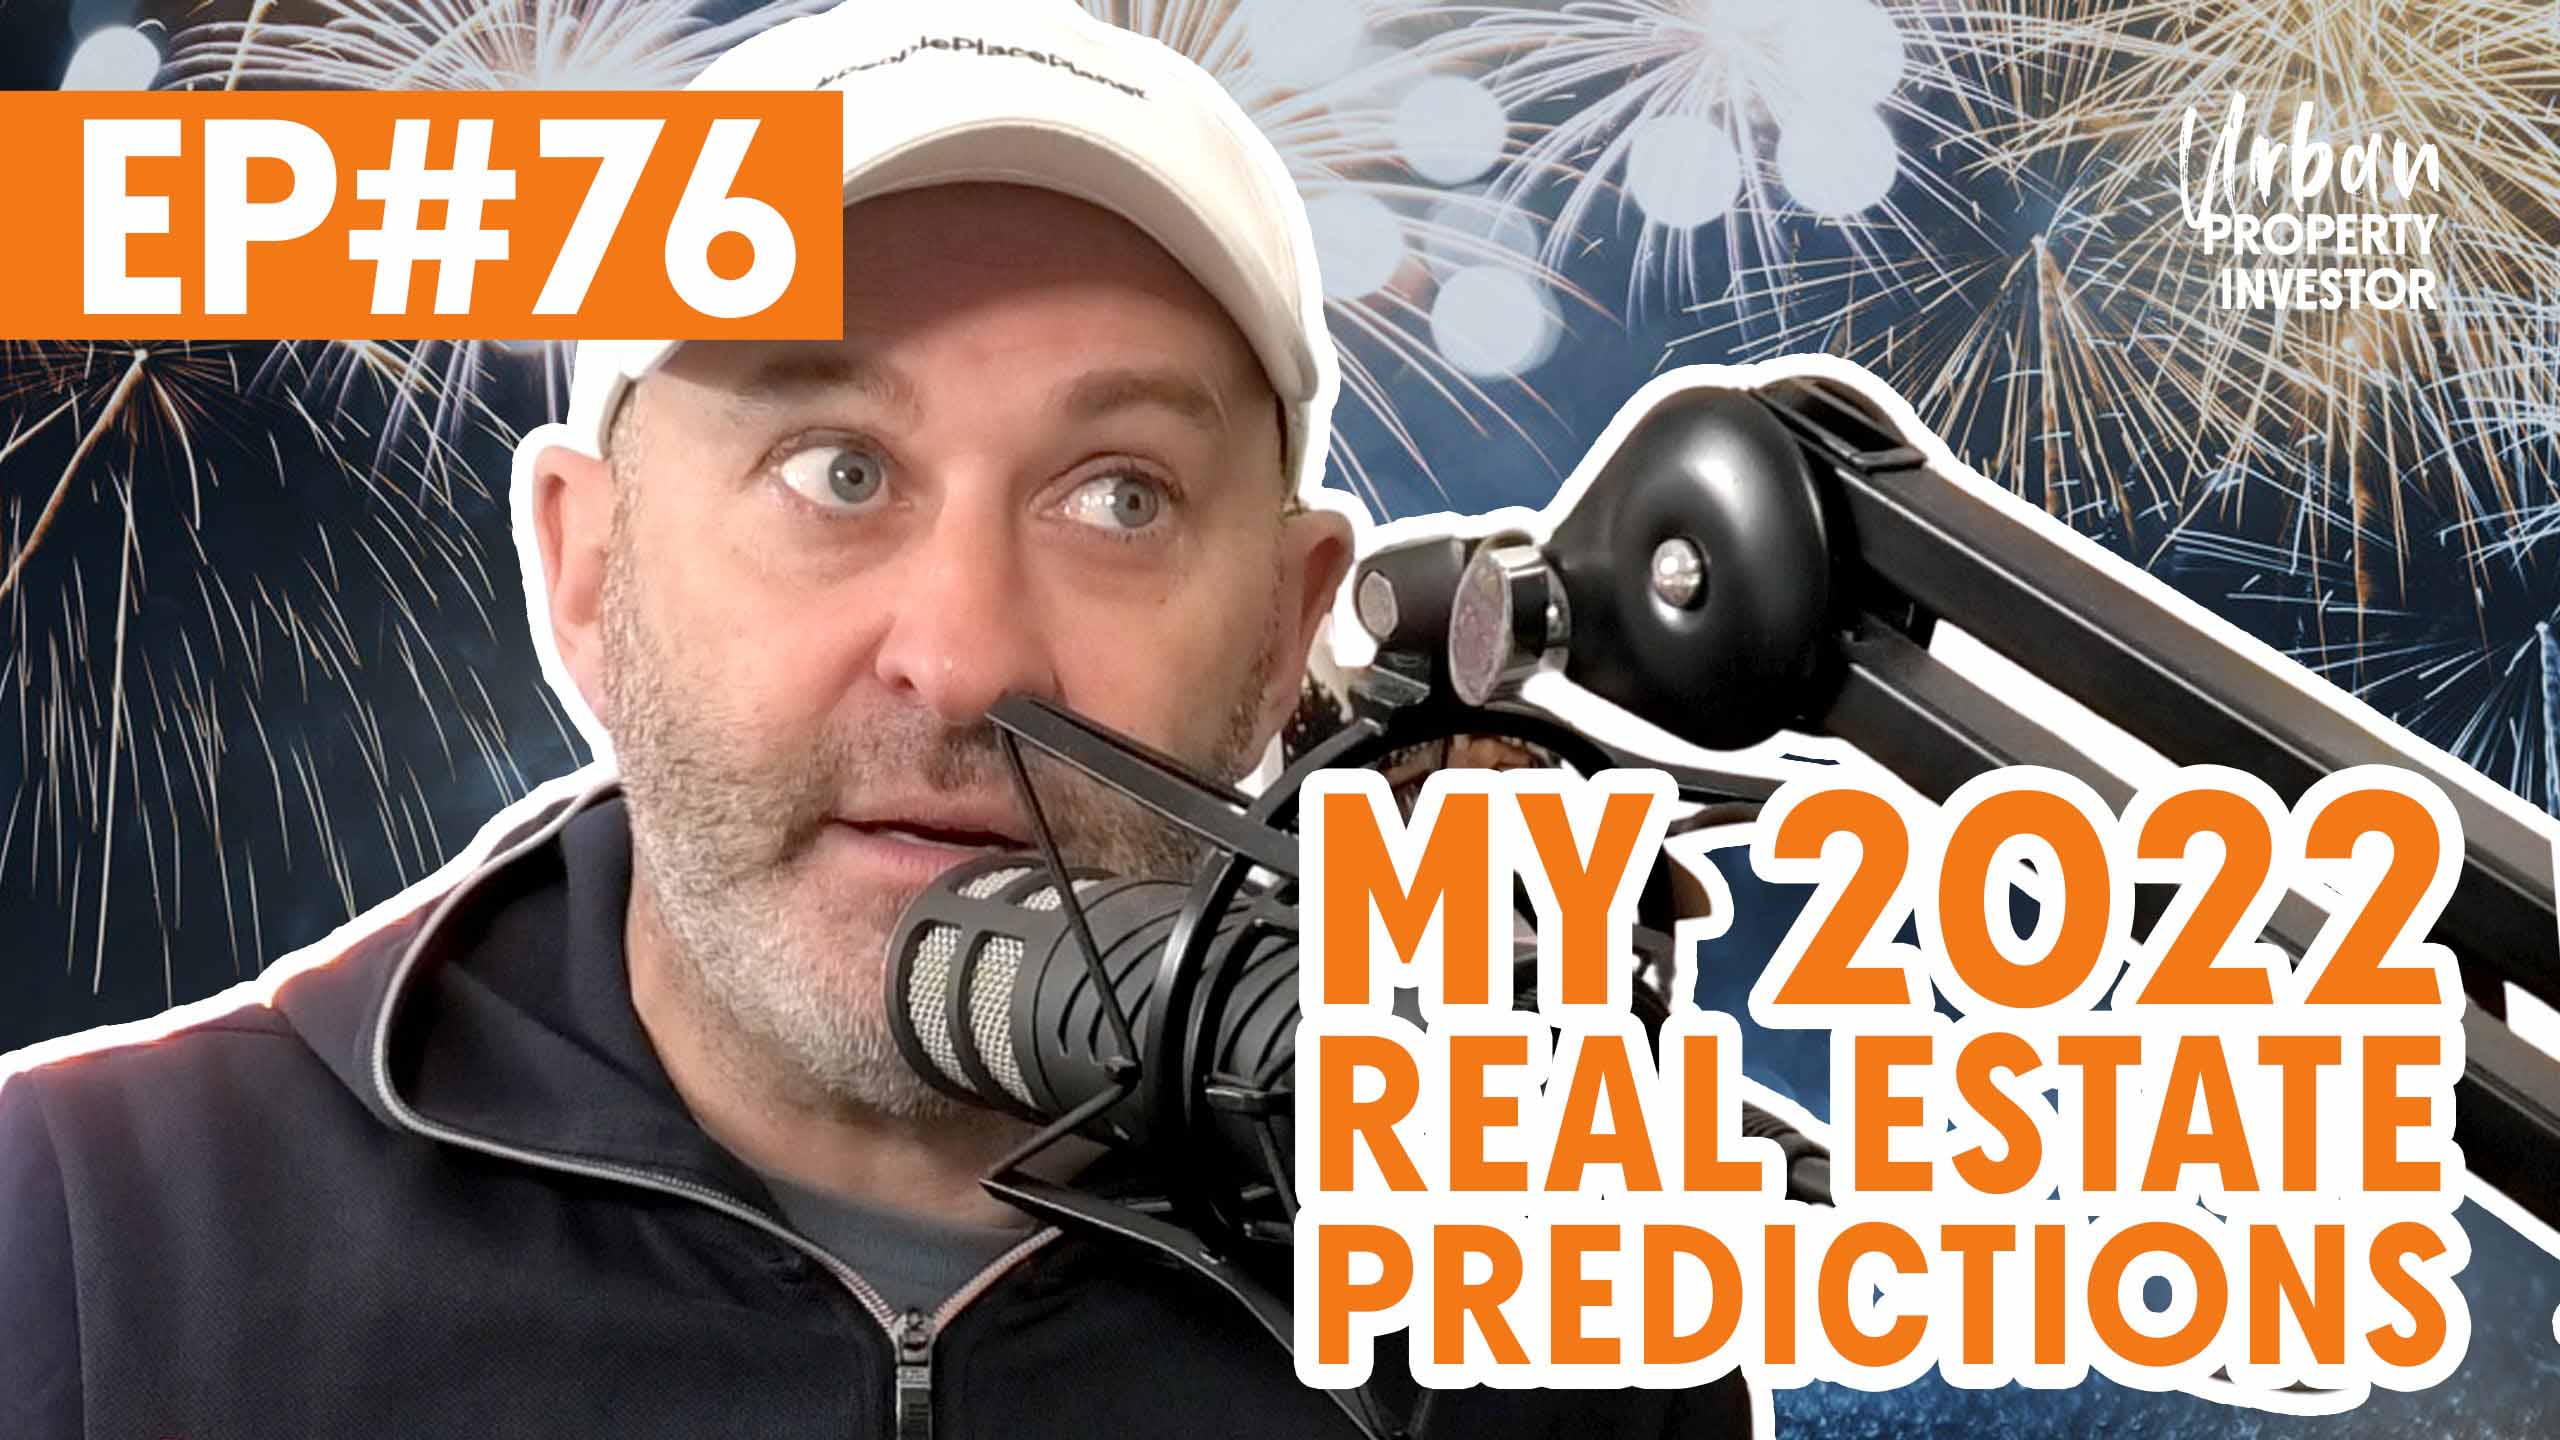 My 2022 Real Estate Predictions